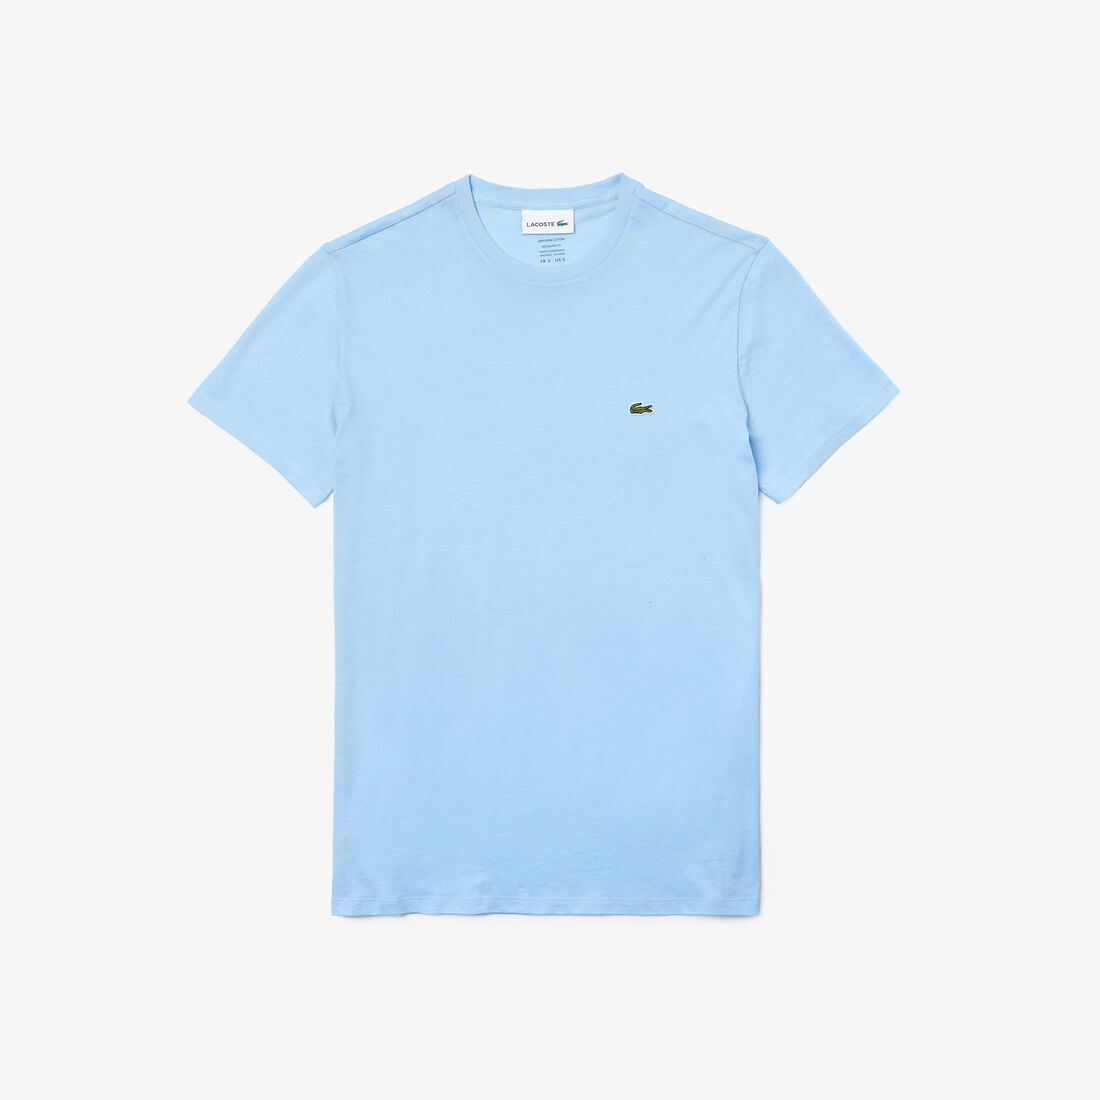 Lacoste - Pima Cotton Jersey T-Shirt, Crew Neck - Light Blue